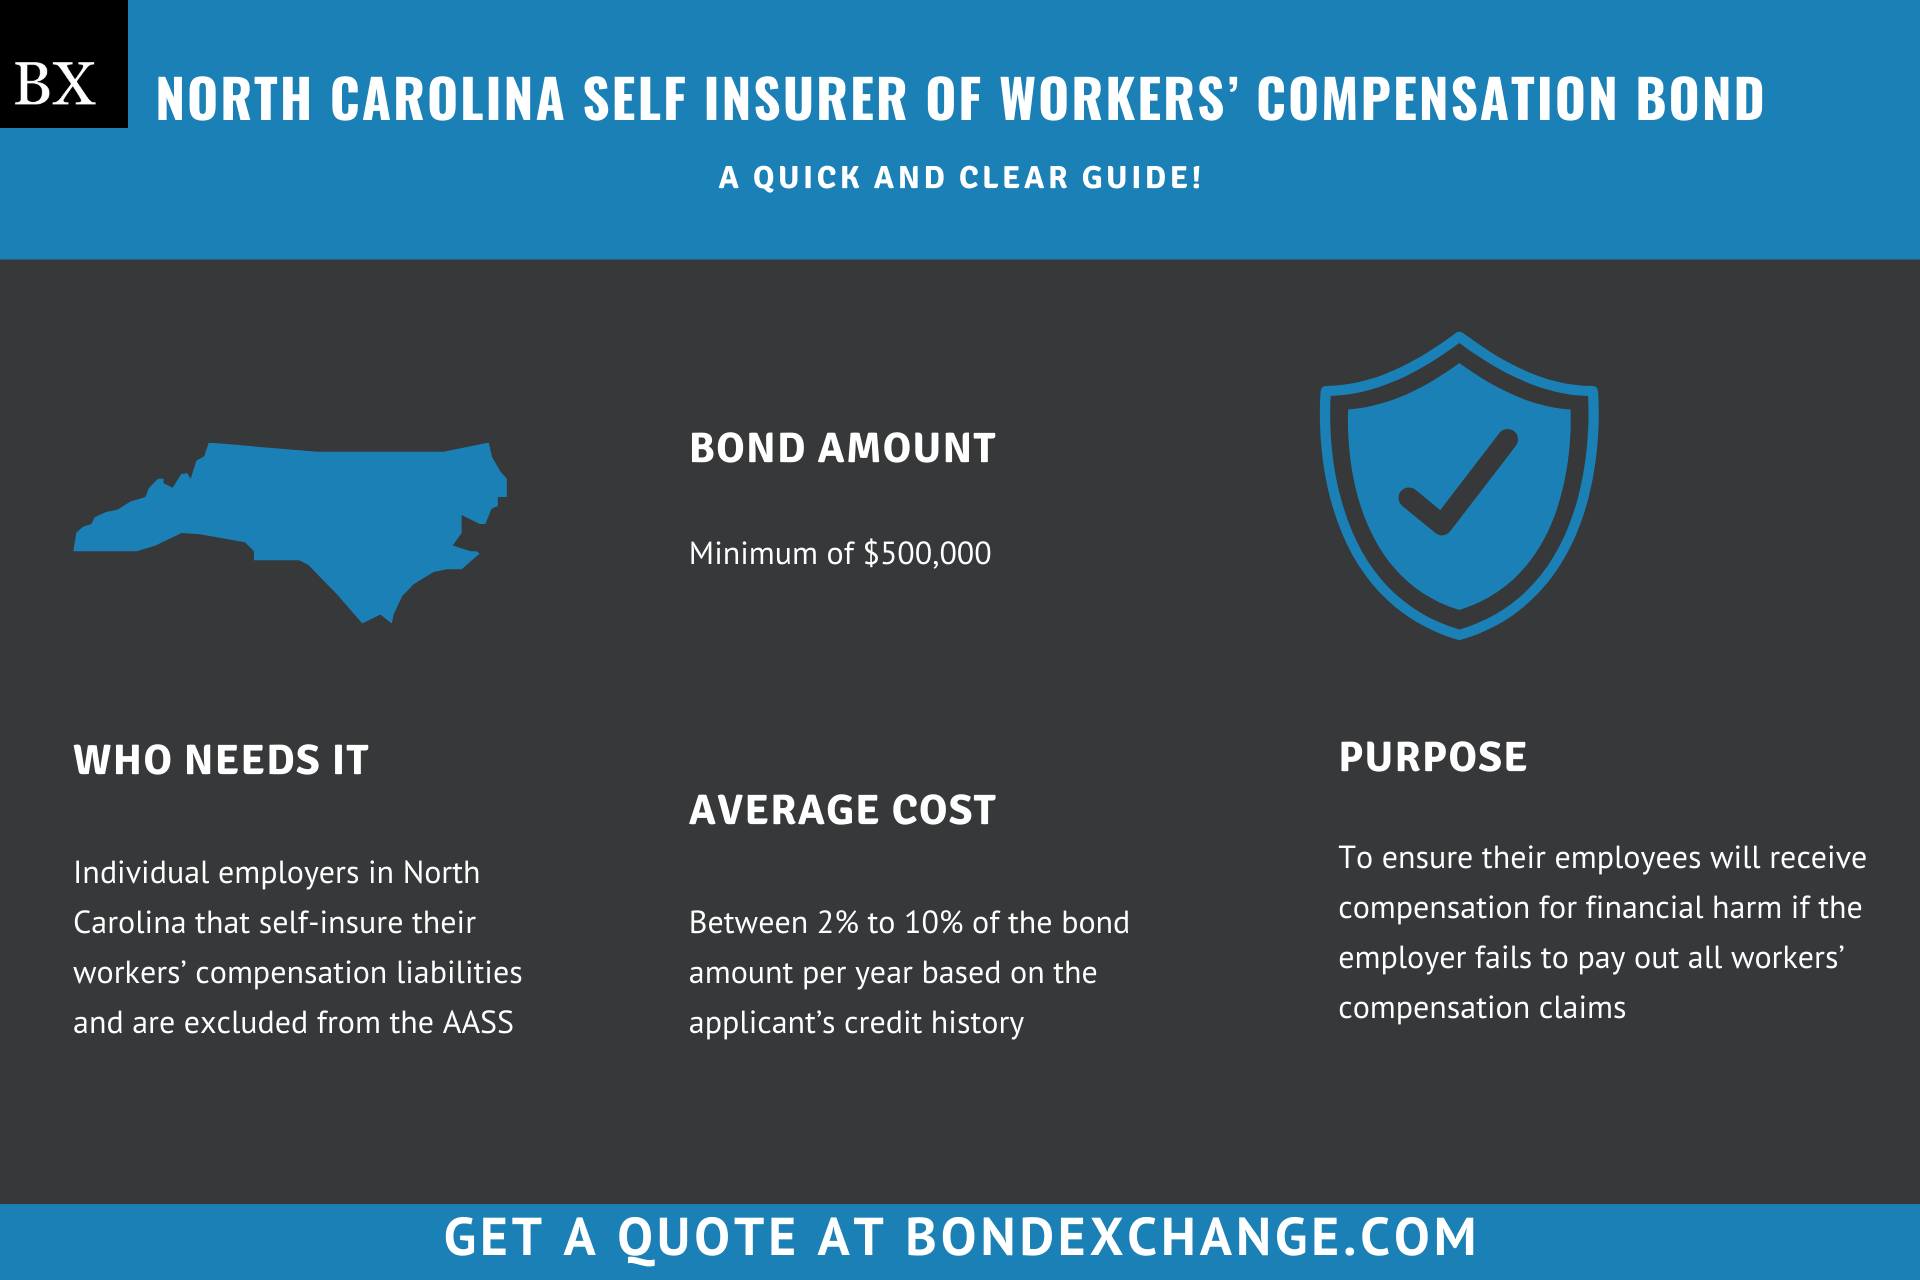 North Carolina Self Insurer of Workers’ Compensation Bond